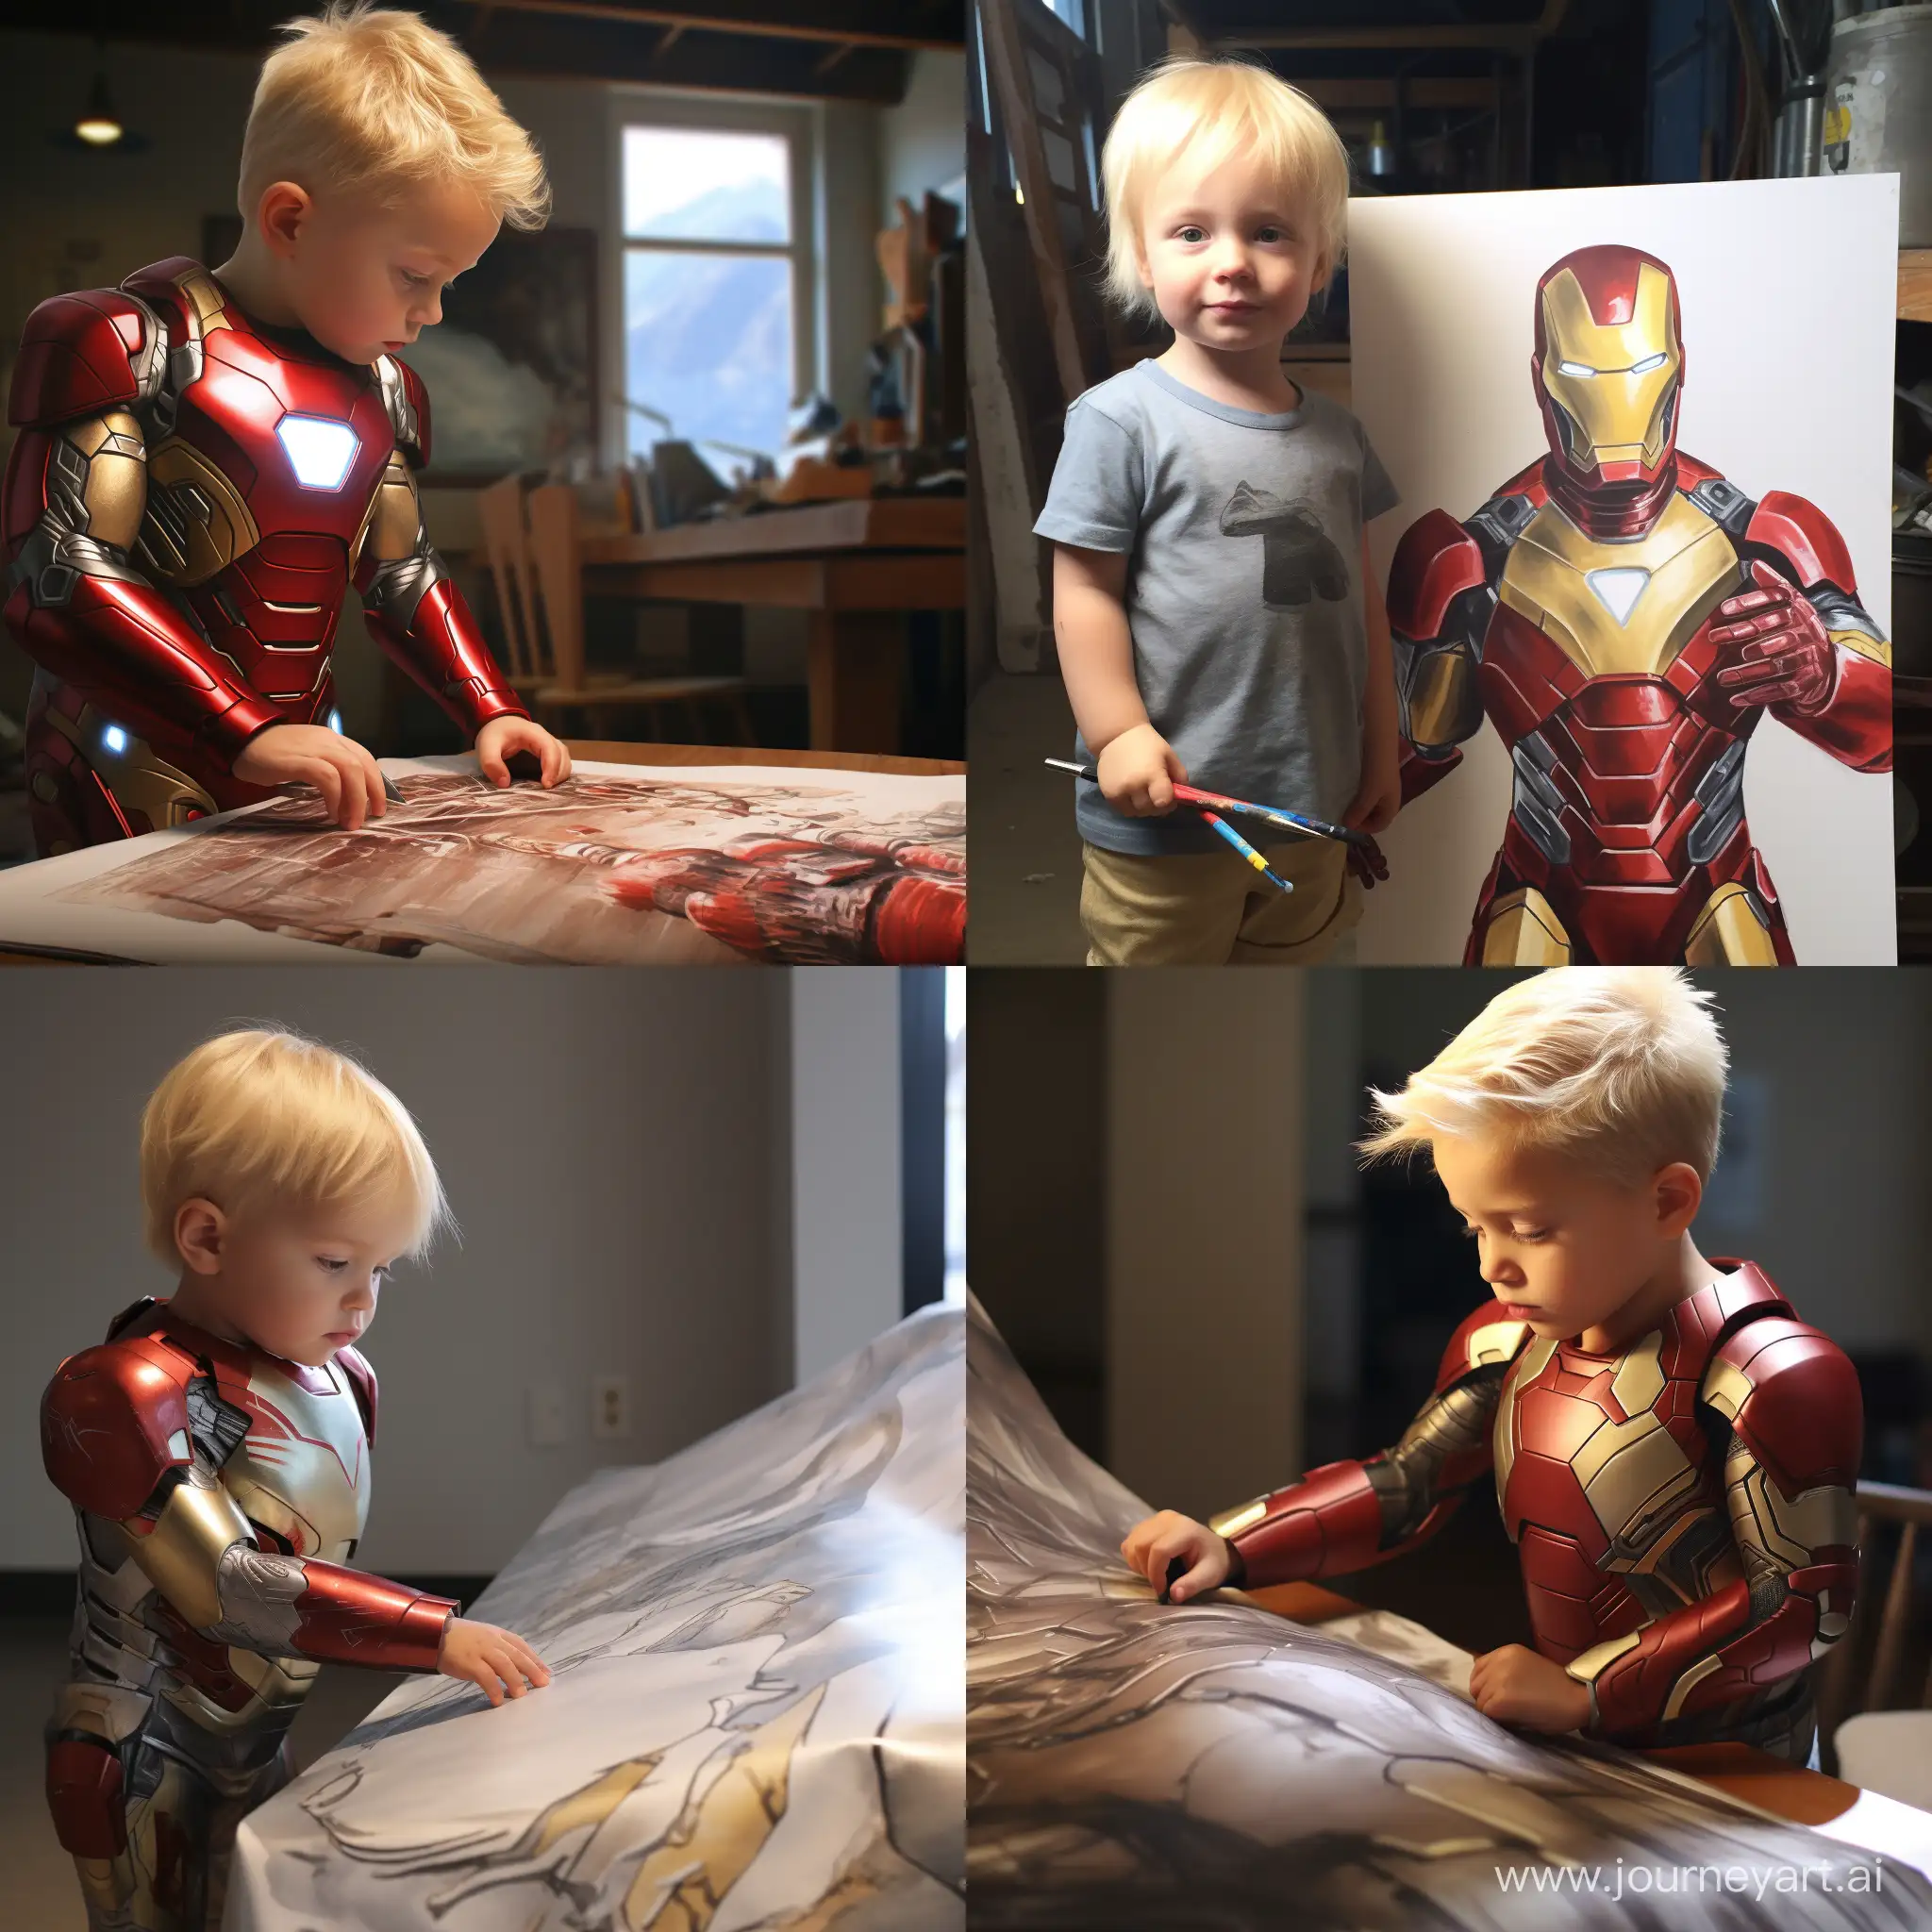 Adorable-Blonde-Toddler-Portraying-Iron-Man-in-Epic-Battle